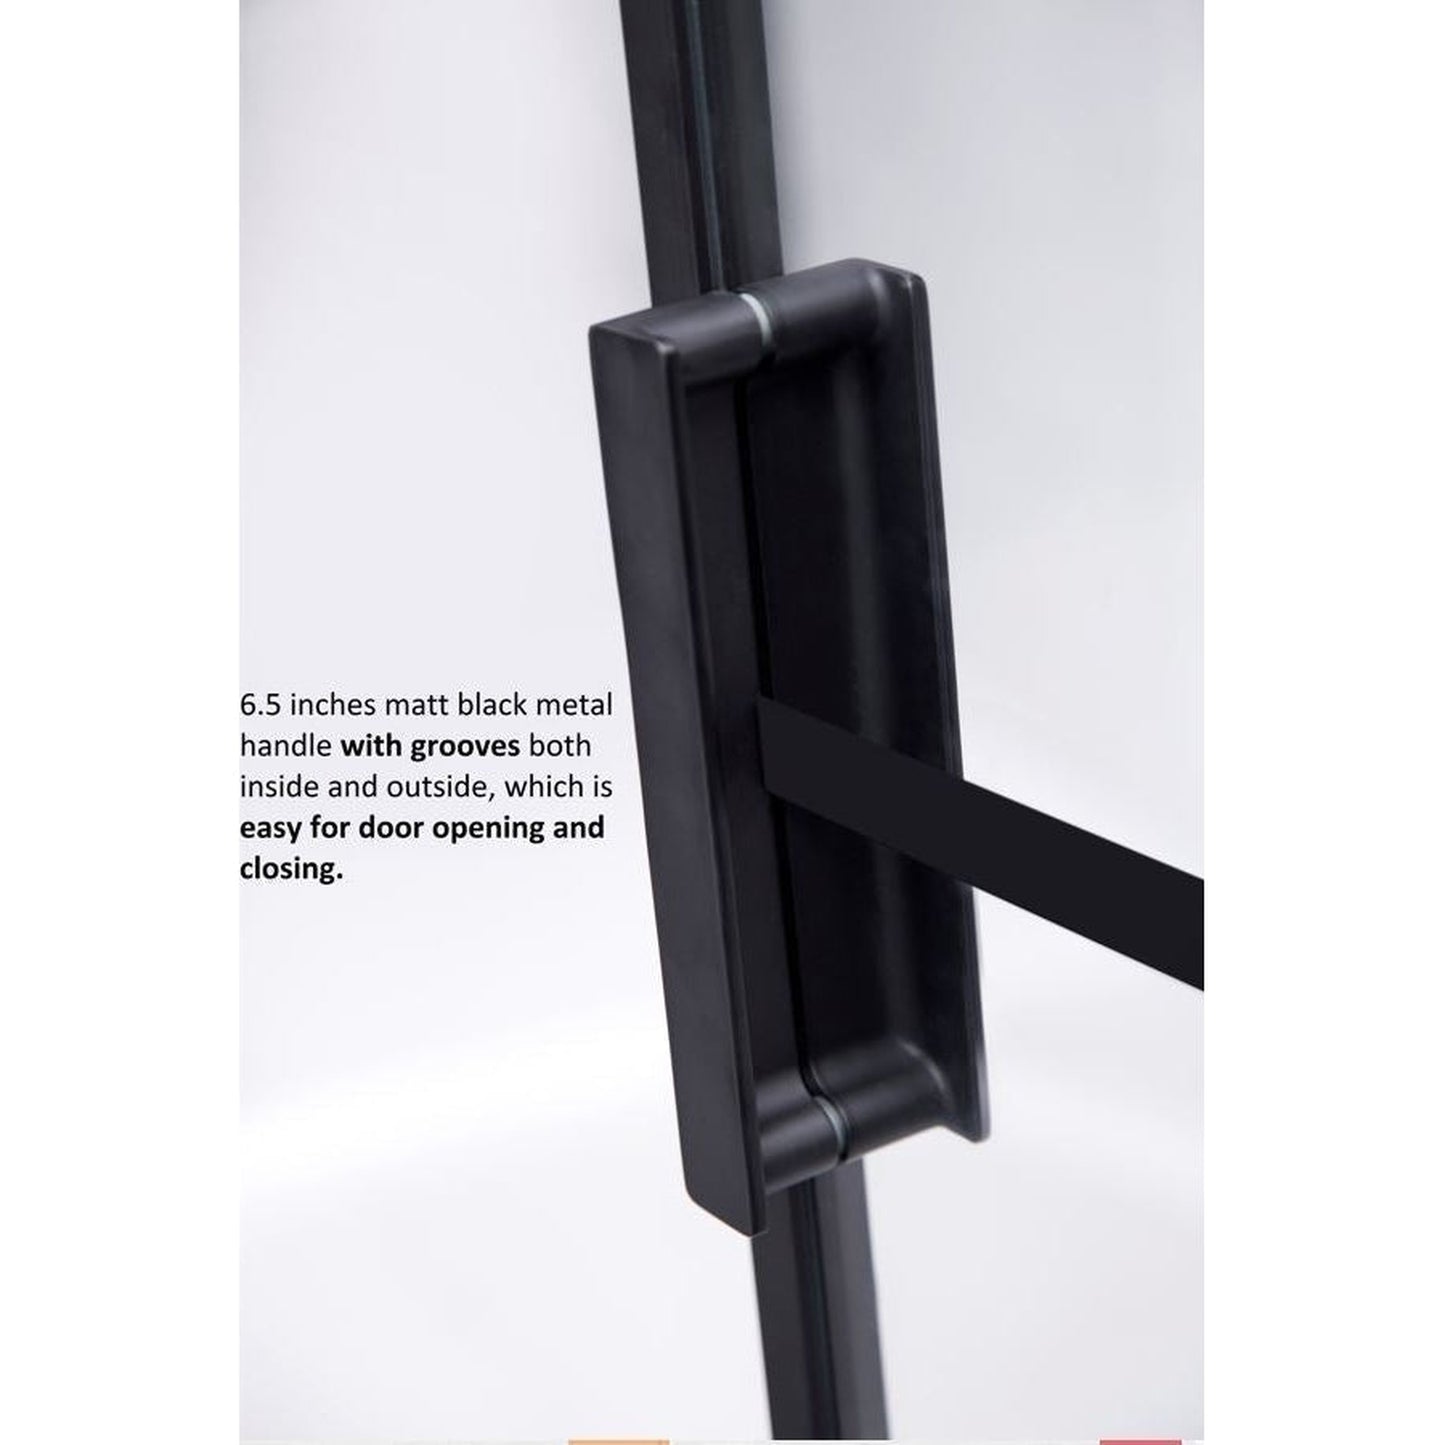 Vinnova Sondrio 48" x 76" Matte Black Rectangle In-line Pivot Door Framed Shower Enclosure With Side panel